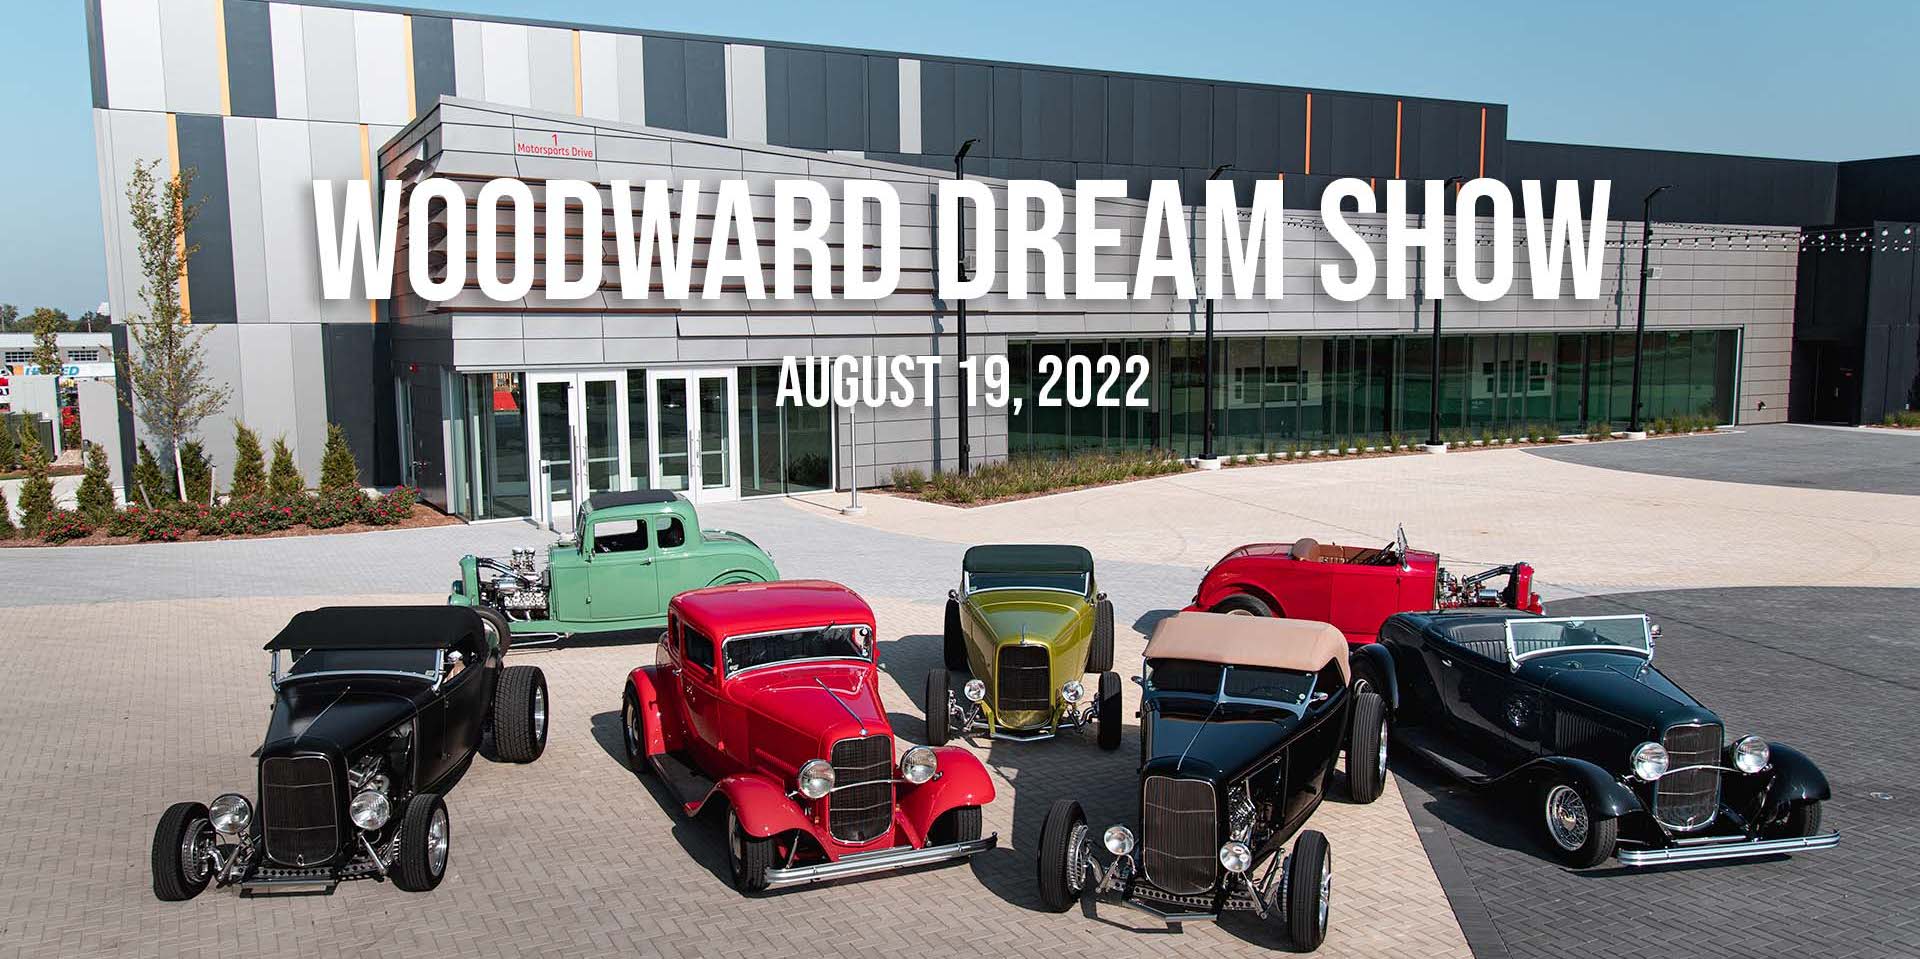 Woodward Dream Show promotional image